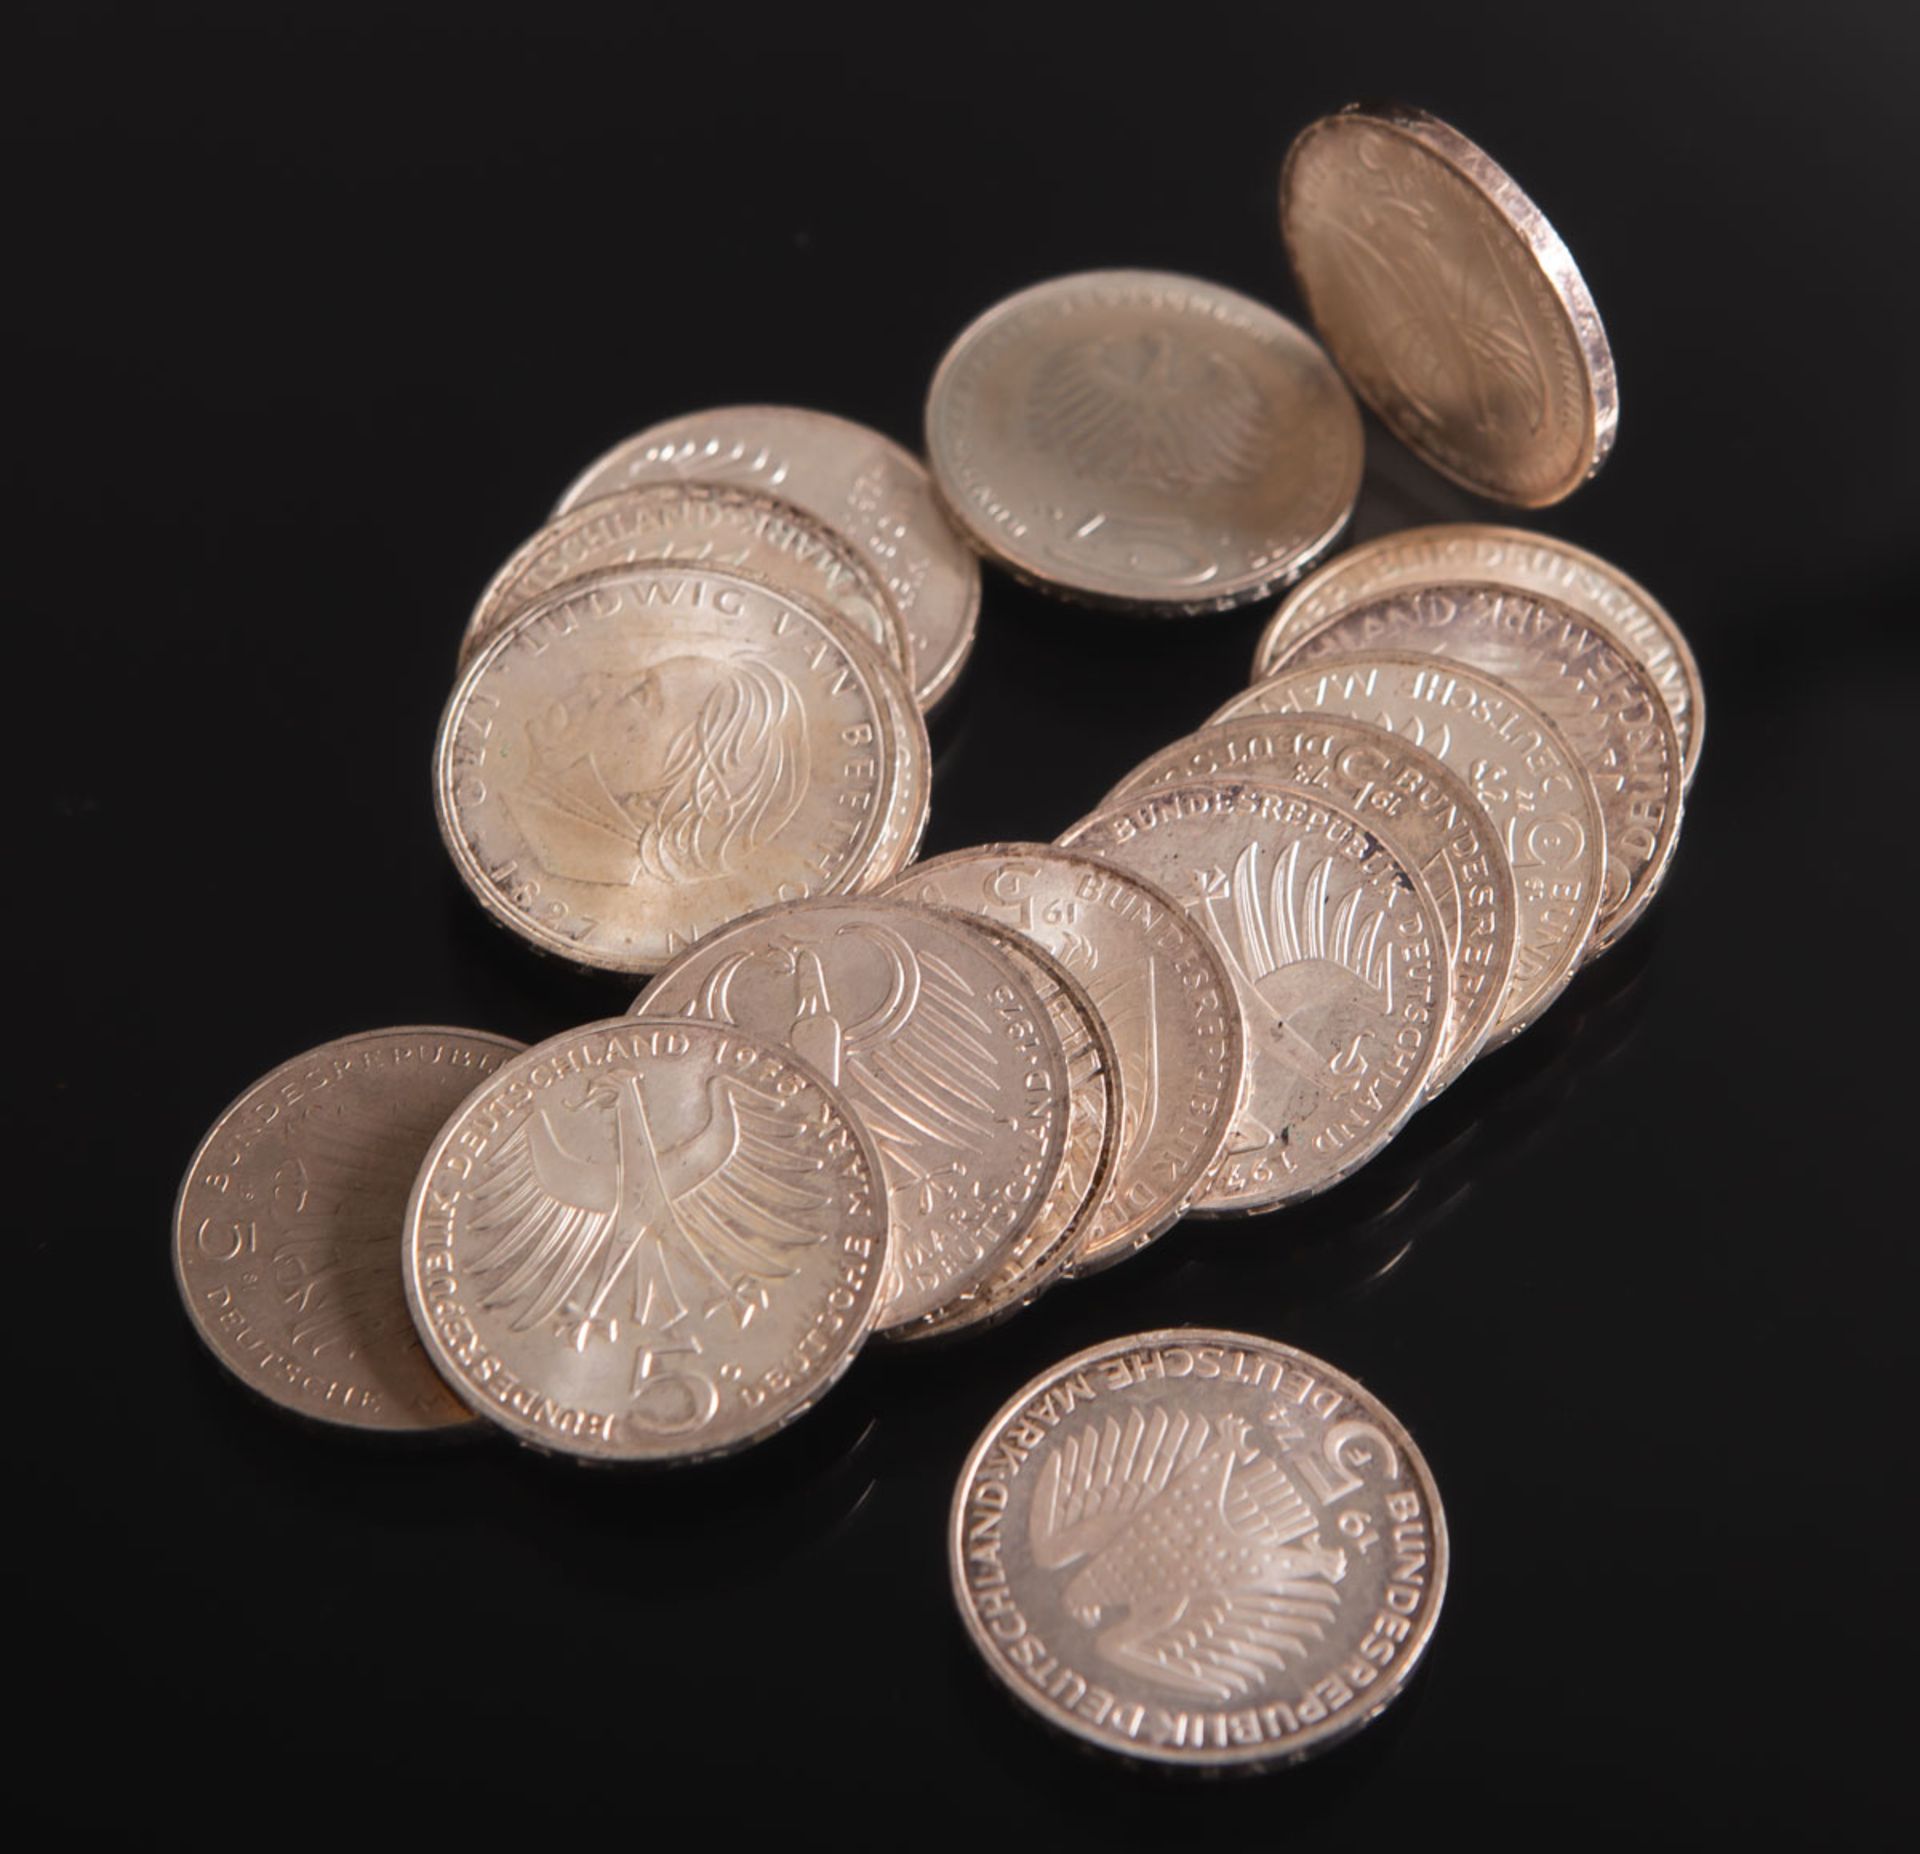 23-teiliges Konvolut BRD-Sondermünzen